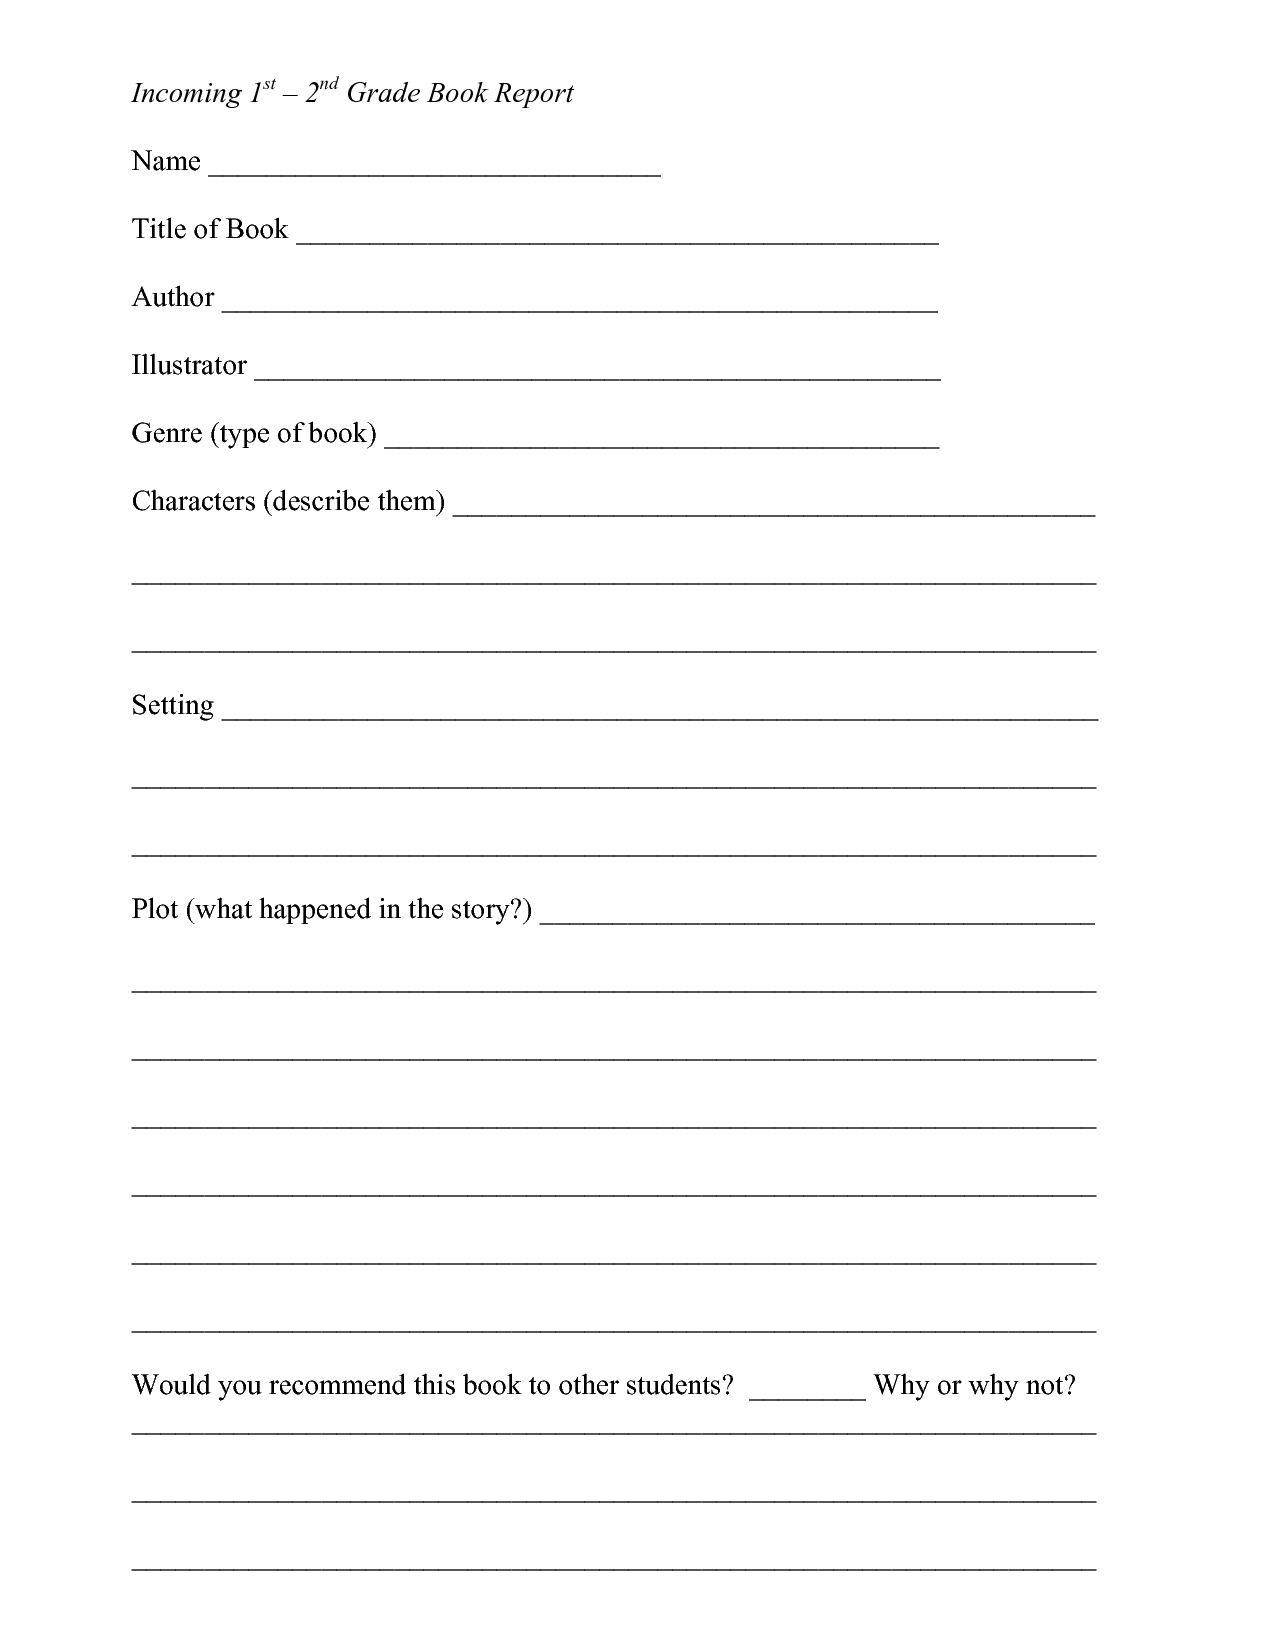 Book Report Template 2Nd Grade Free – Book Report Form With Regard To 1St Grade Book Report Template